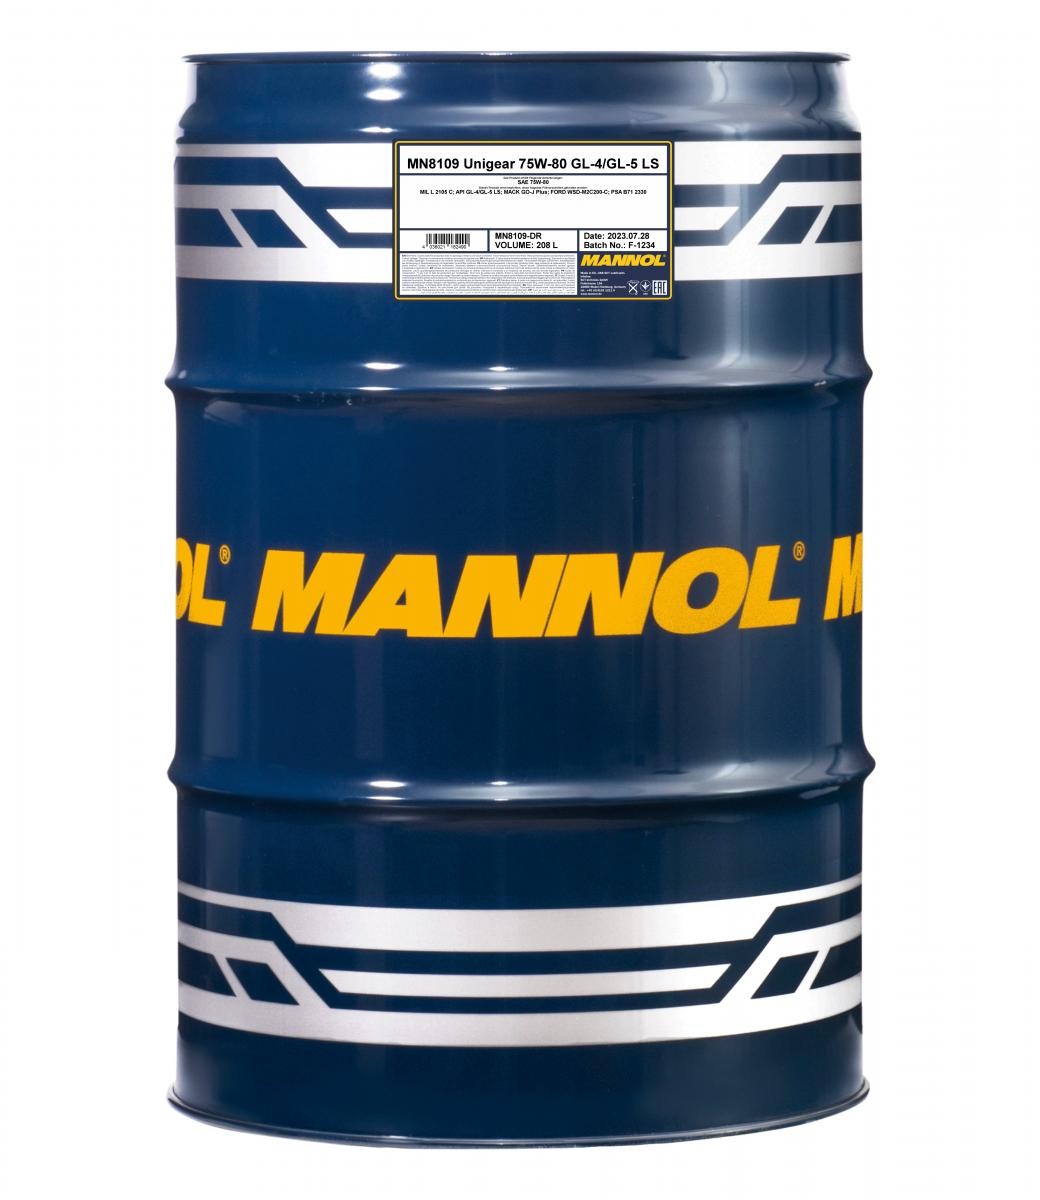 MANNOL Unigear MN8109-DR Transmission fluid 75W-80, Synthetic Oil, Capacity: 208l